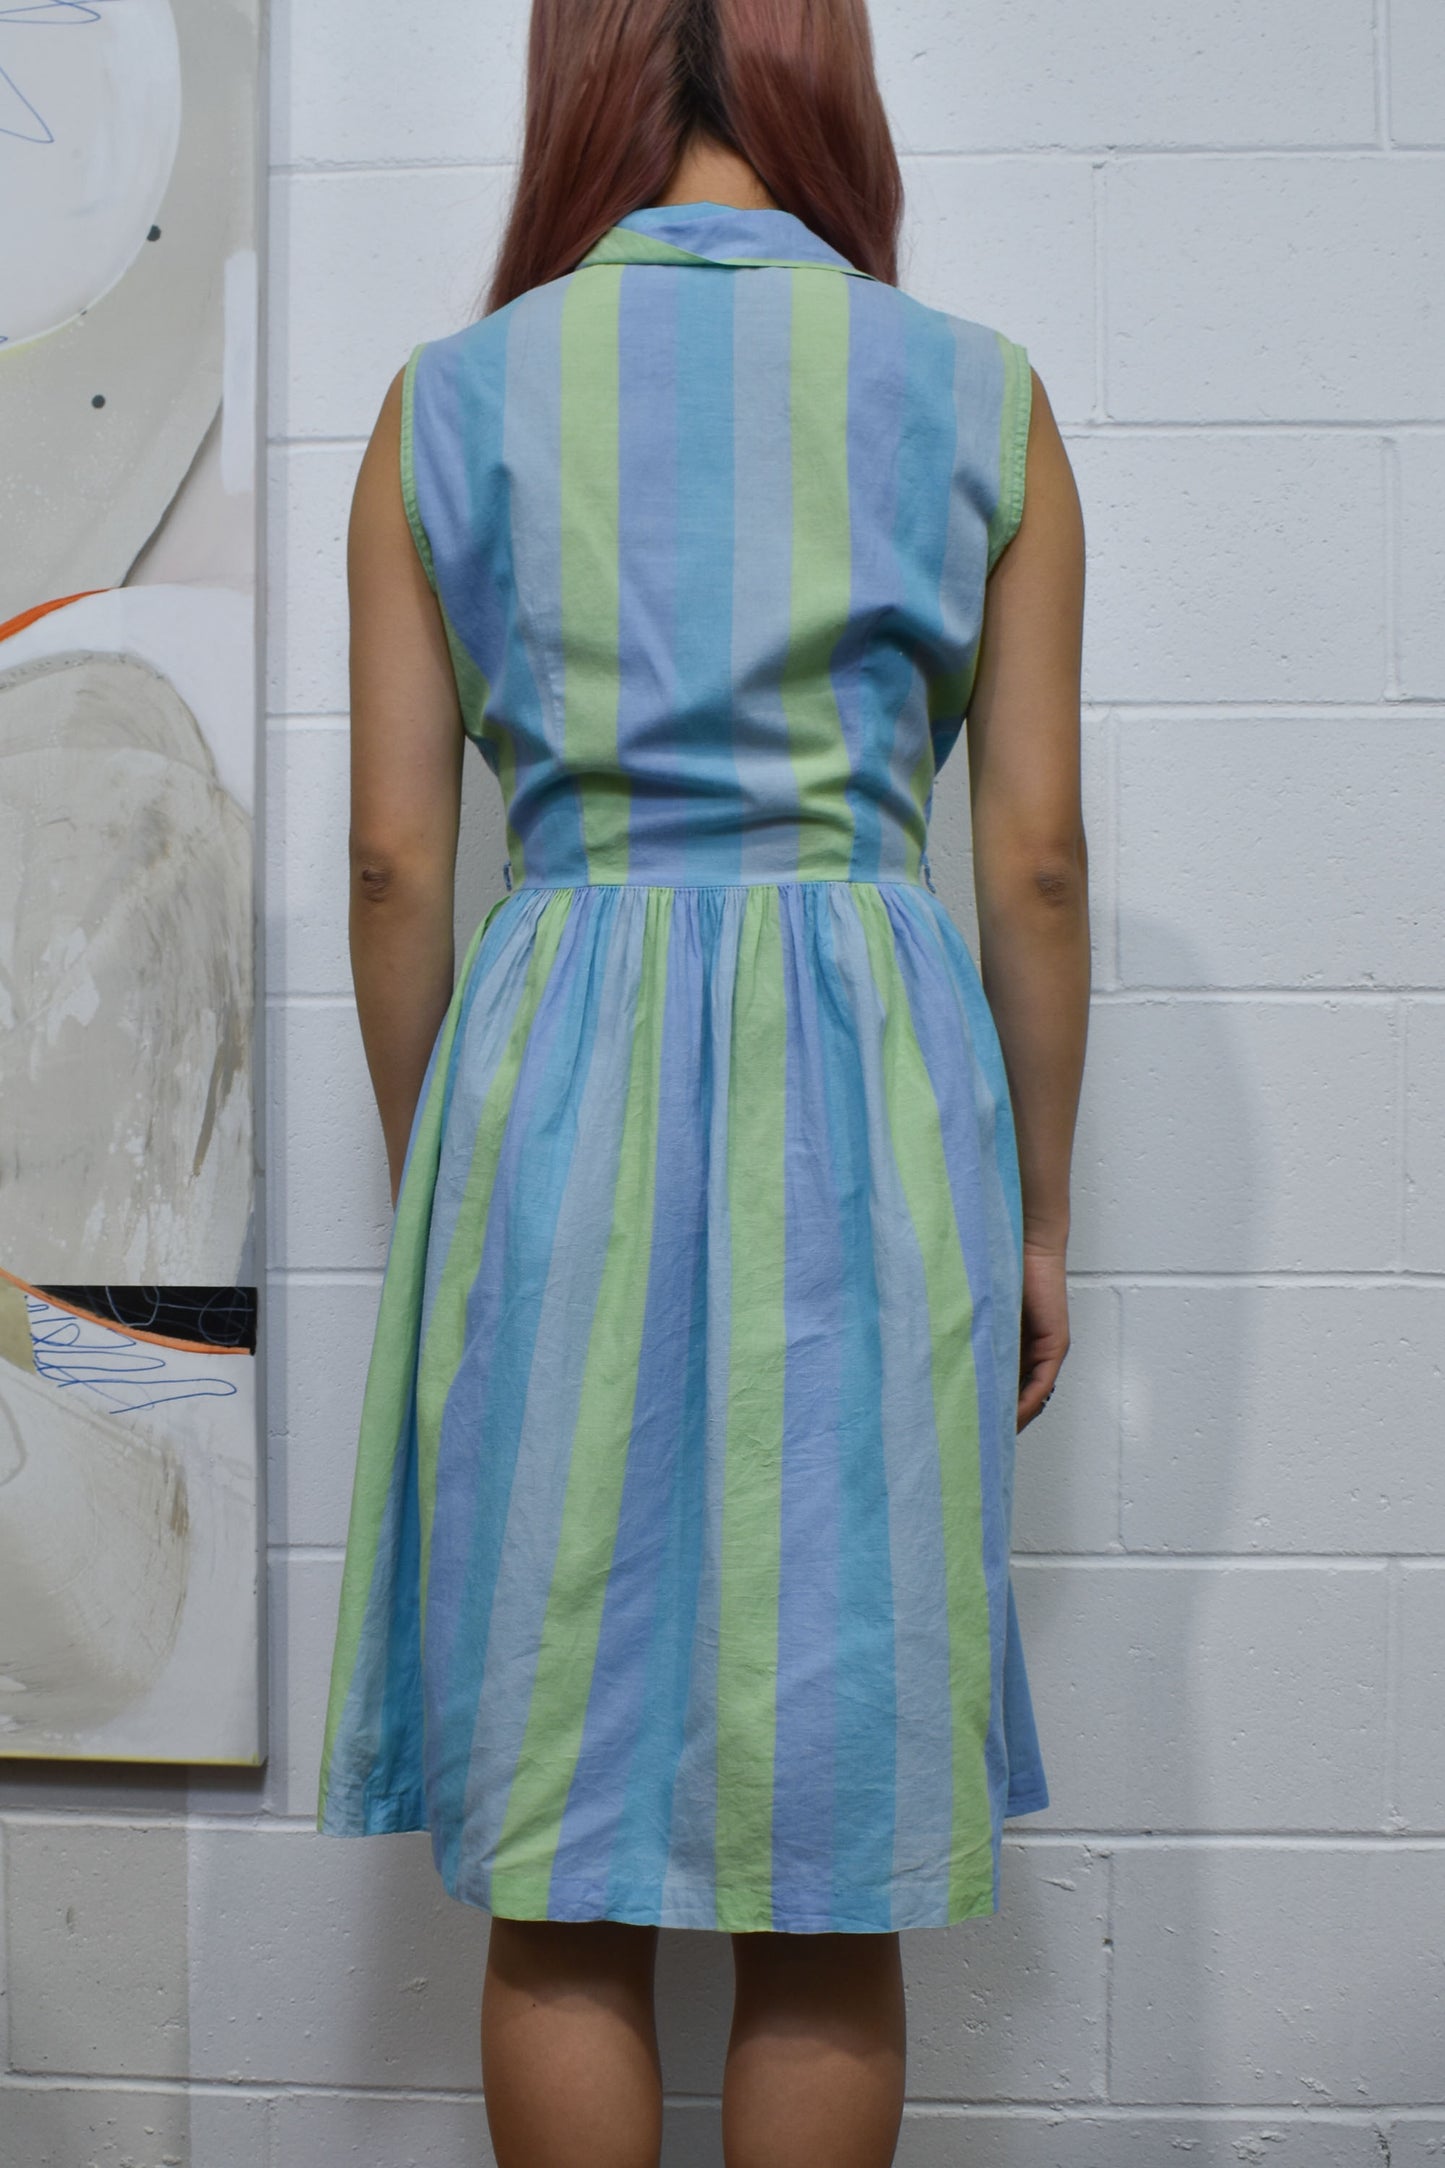 Vintage 1960's "Sears" Striped Cotton Day Dress